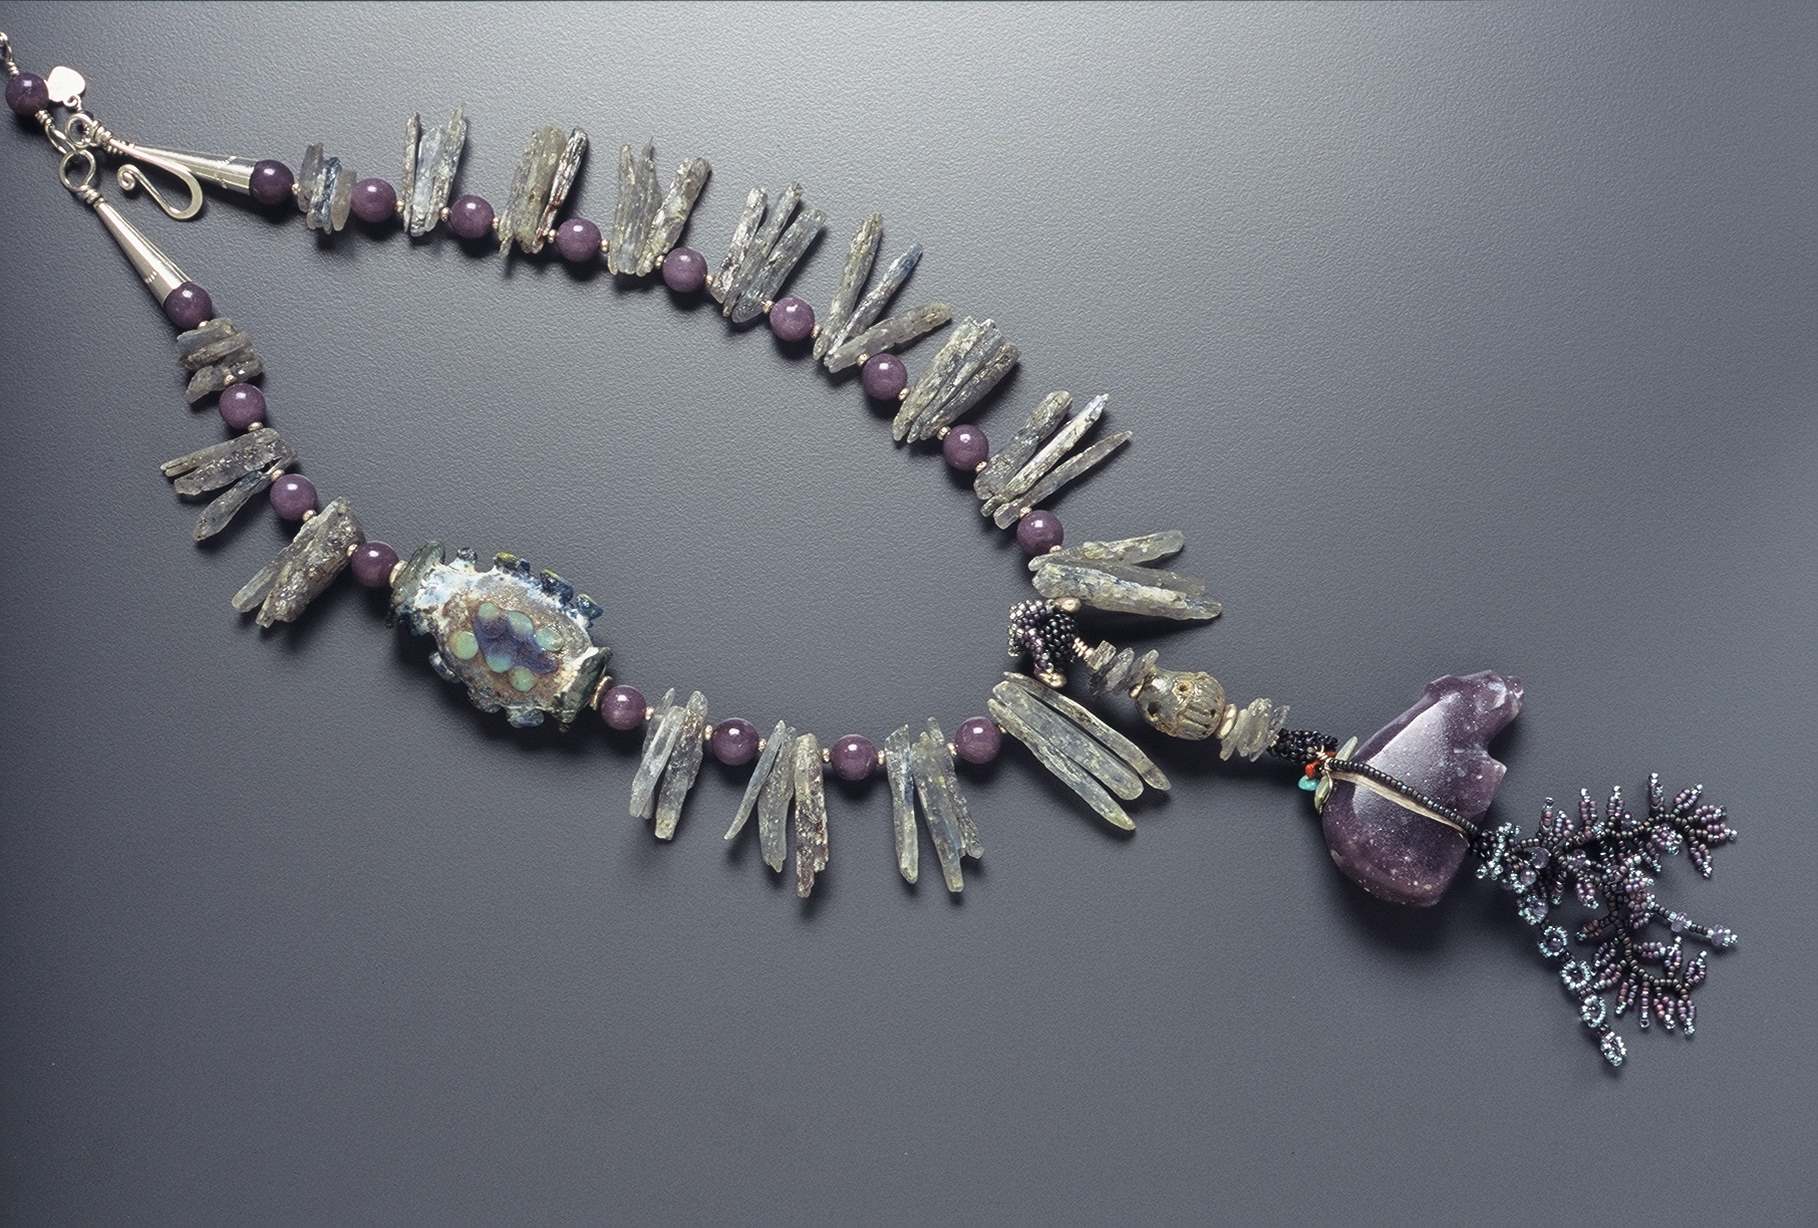 Detail of Blueberry Medicine Bear Necklace